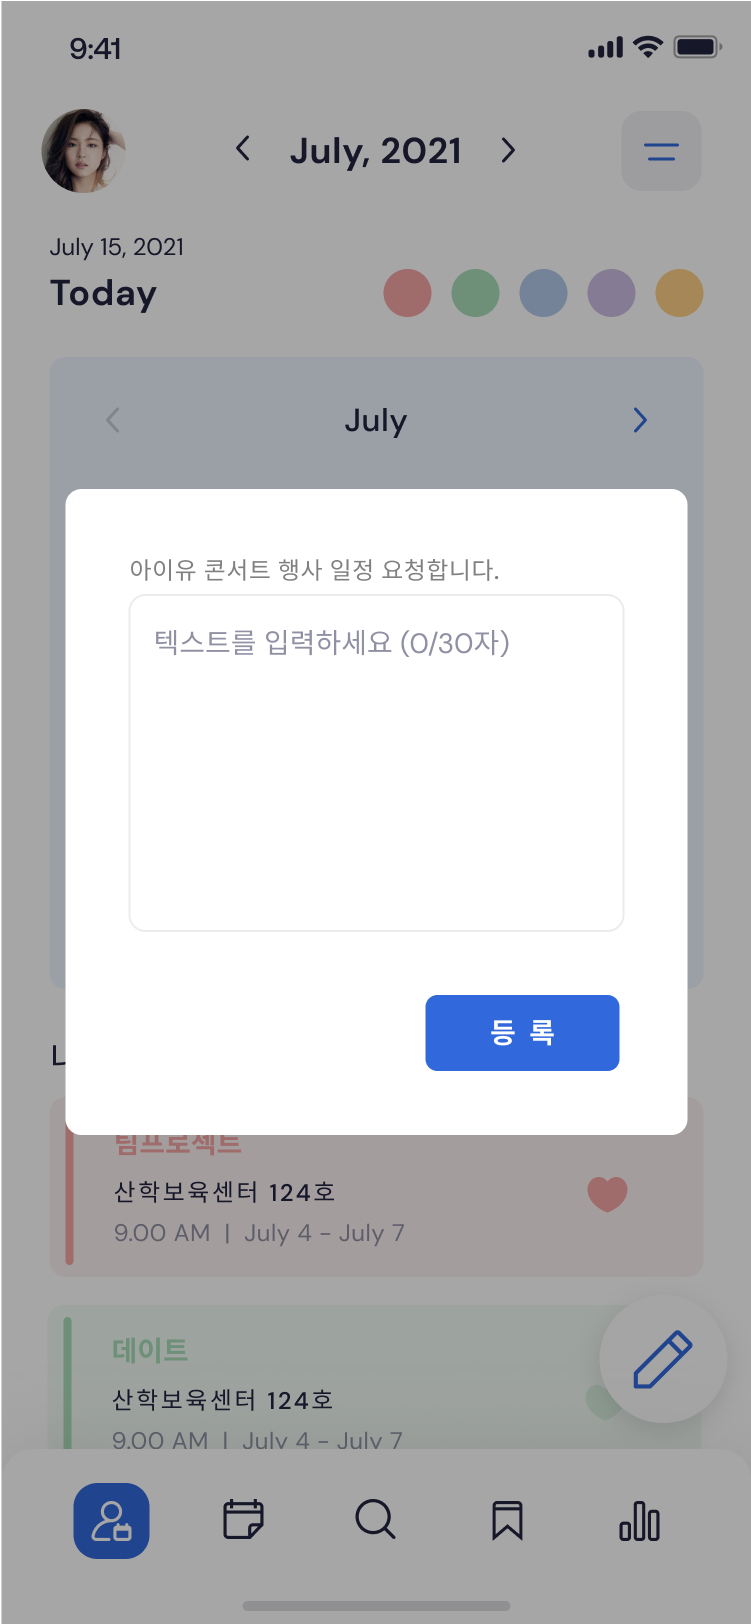 Tab_1 app info request - 일정 요청